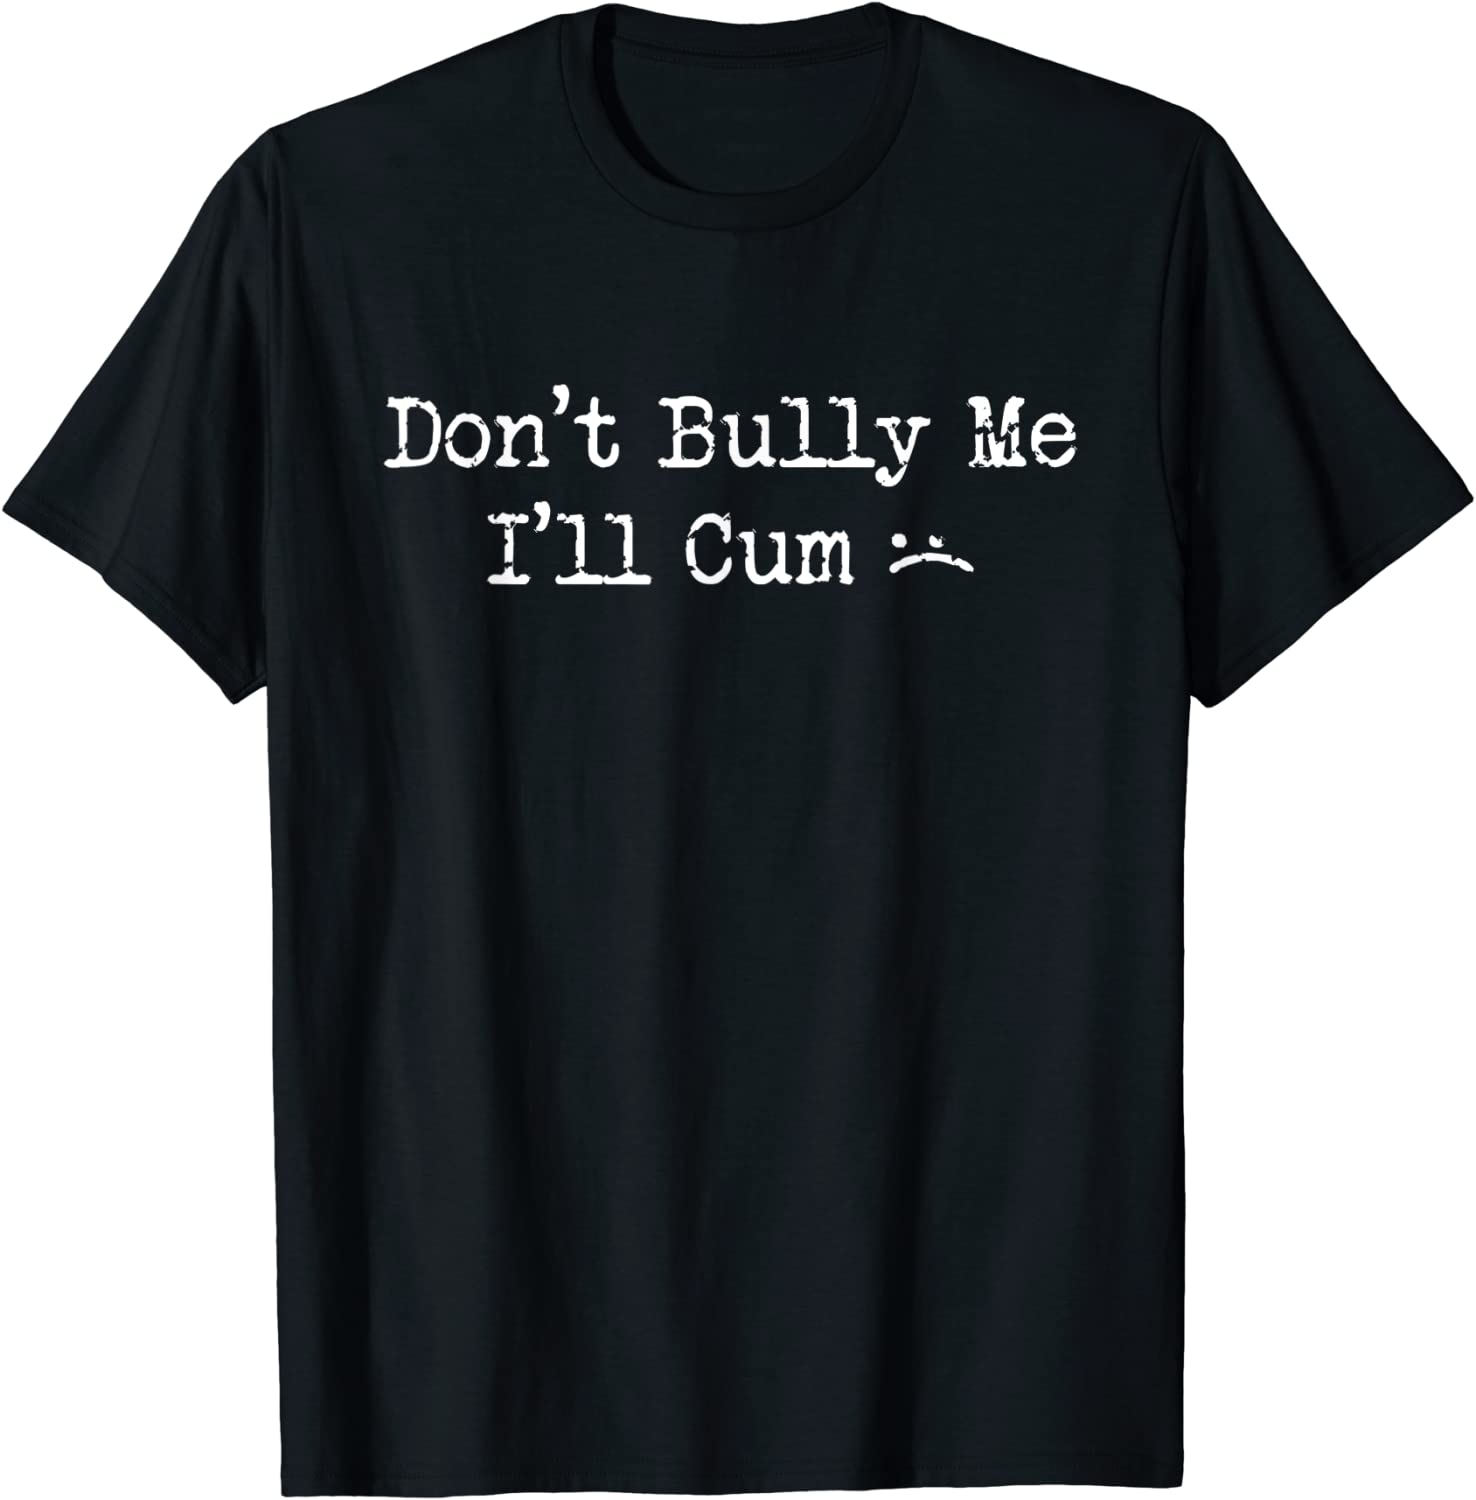 Don't Bully Me I'll Cum (8)